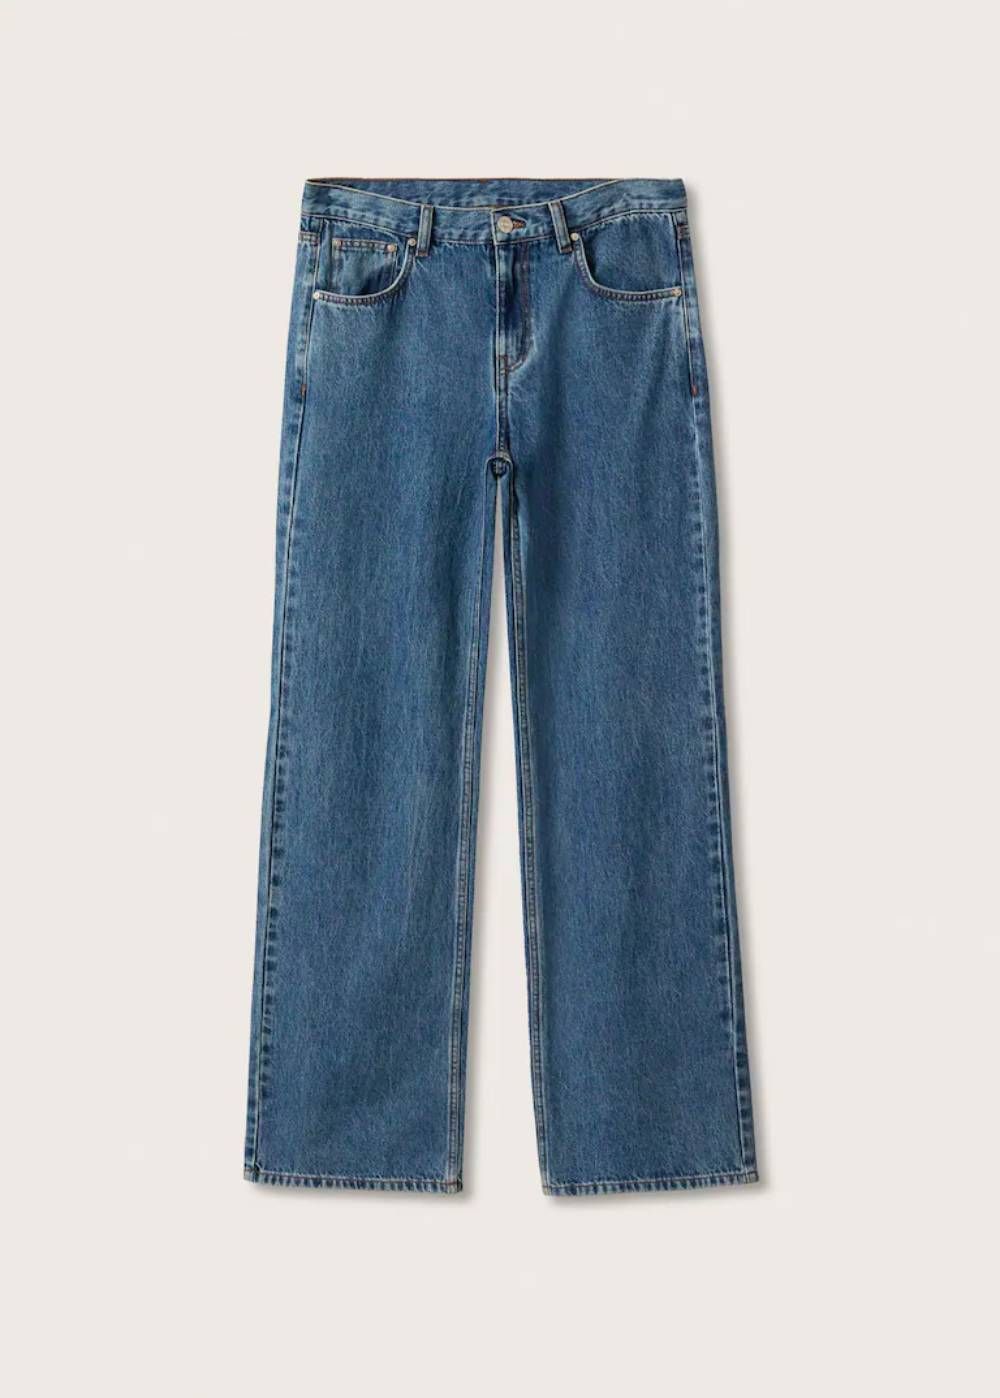 Mode Spijkerbroeken Low Rise jeans AJC Low Rise jeans blauw casual uitstraling 